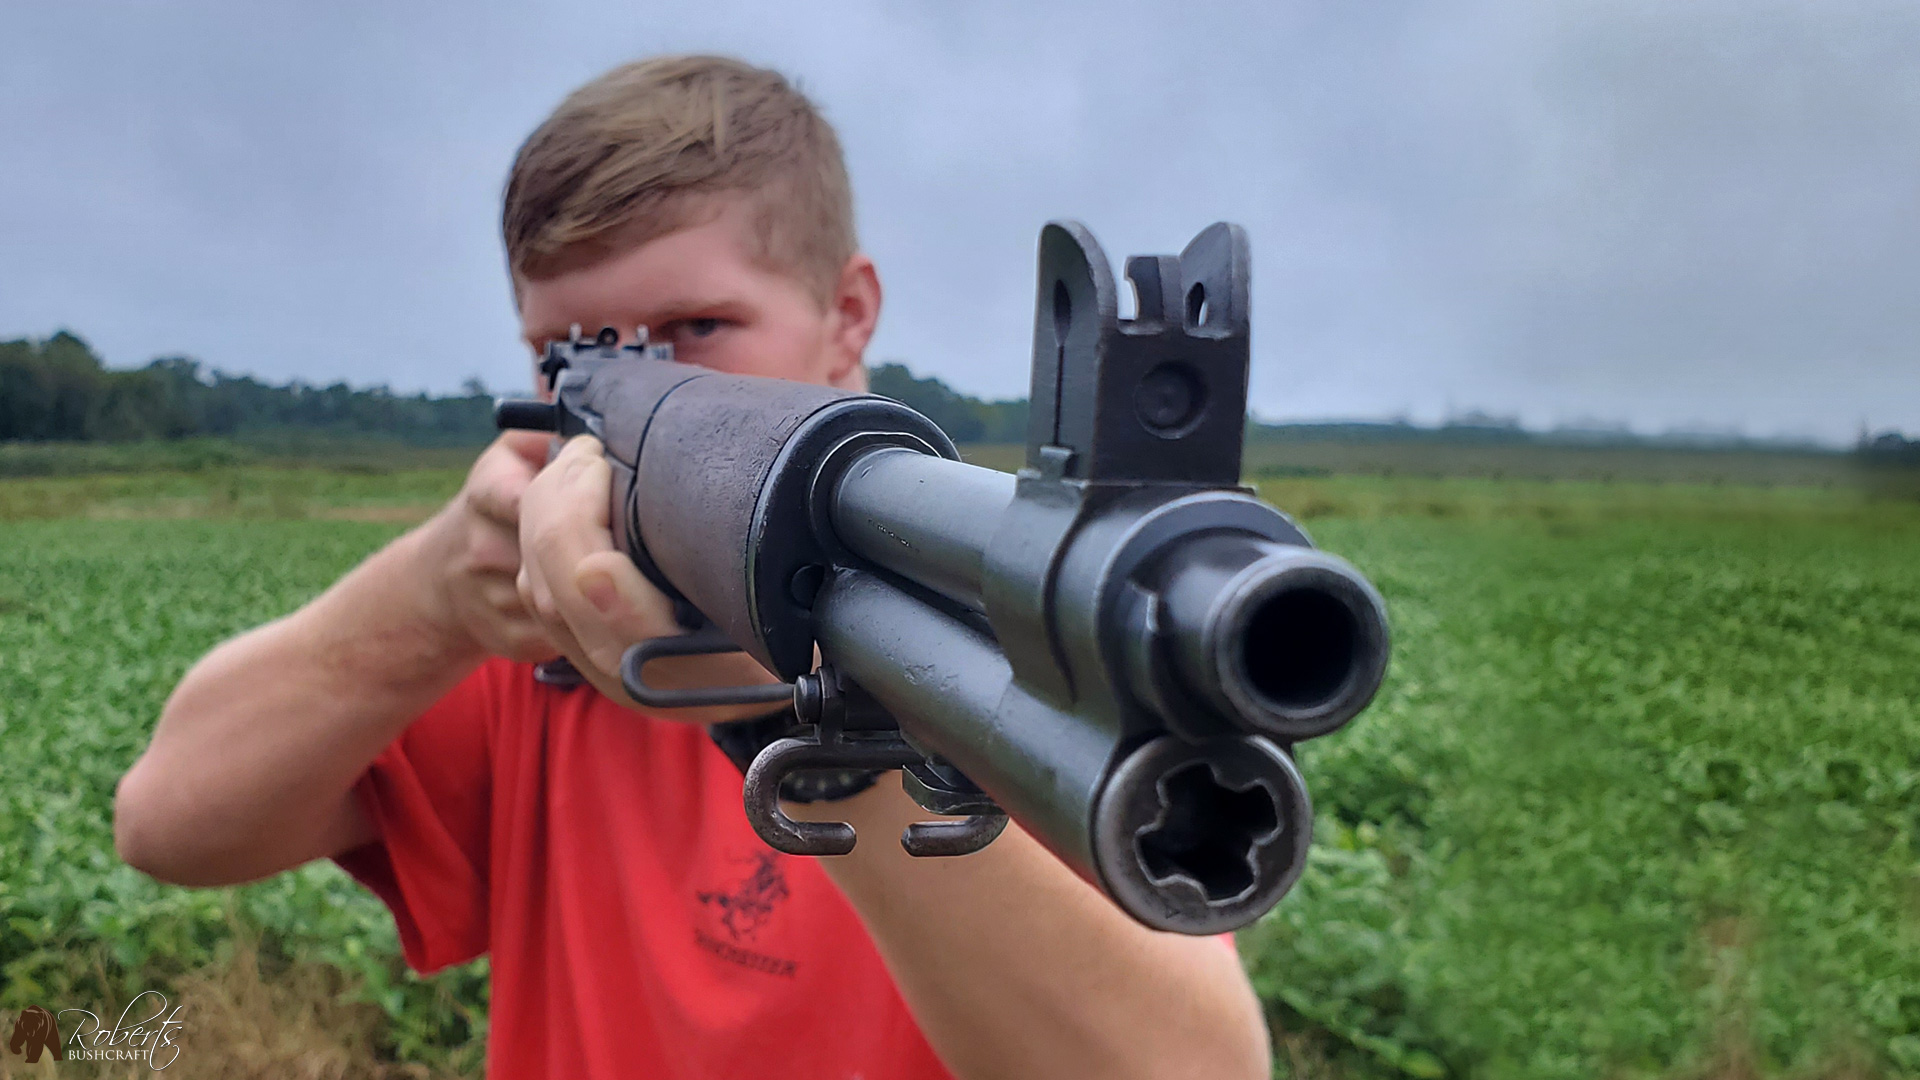 Shooting a Springfield M1 Garand rifle